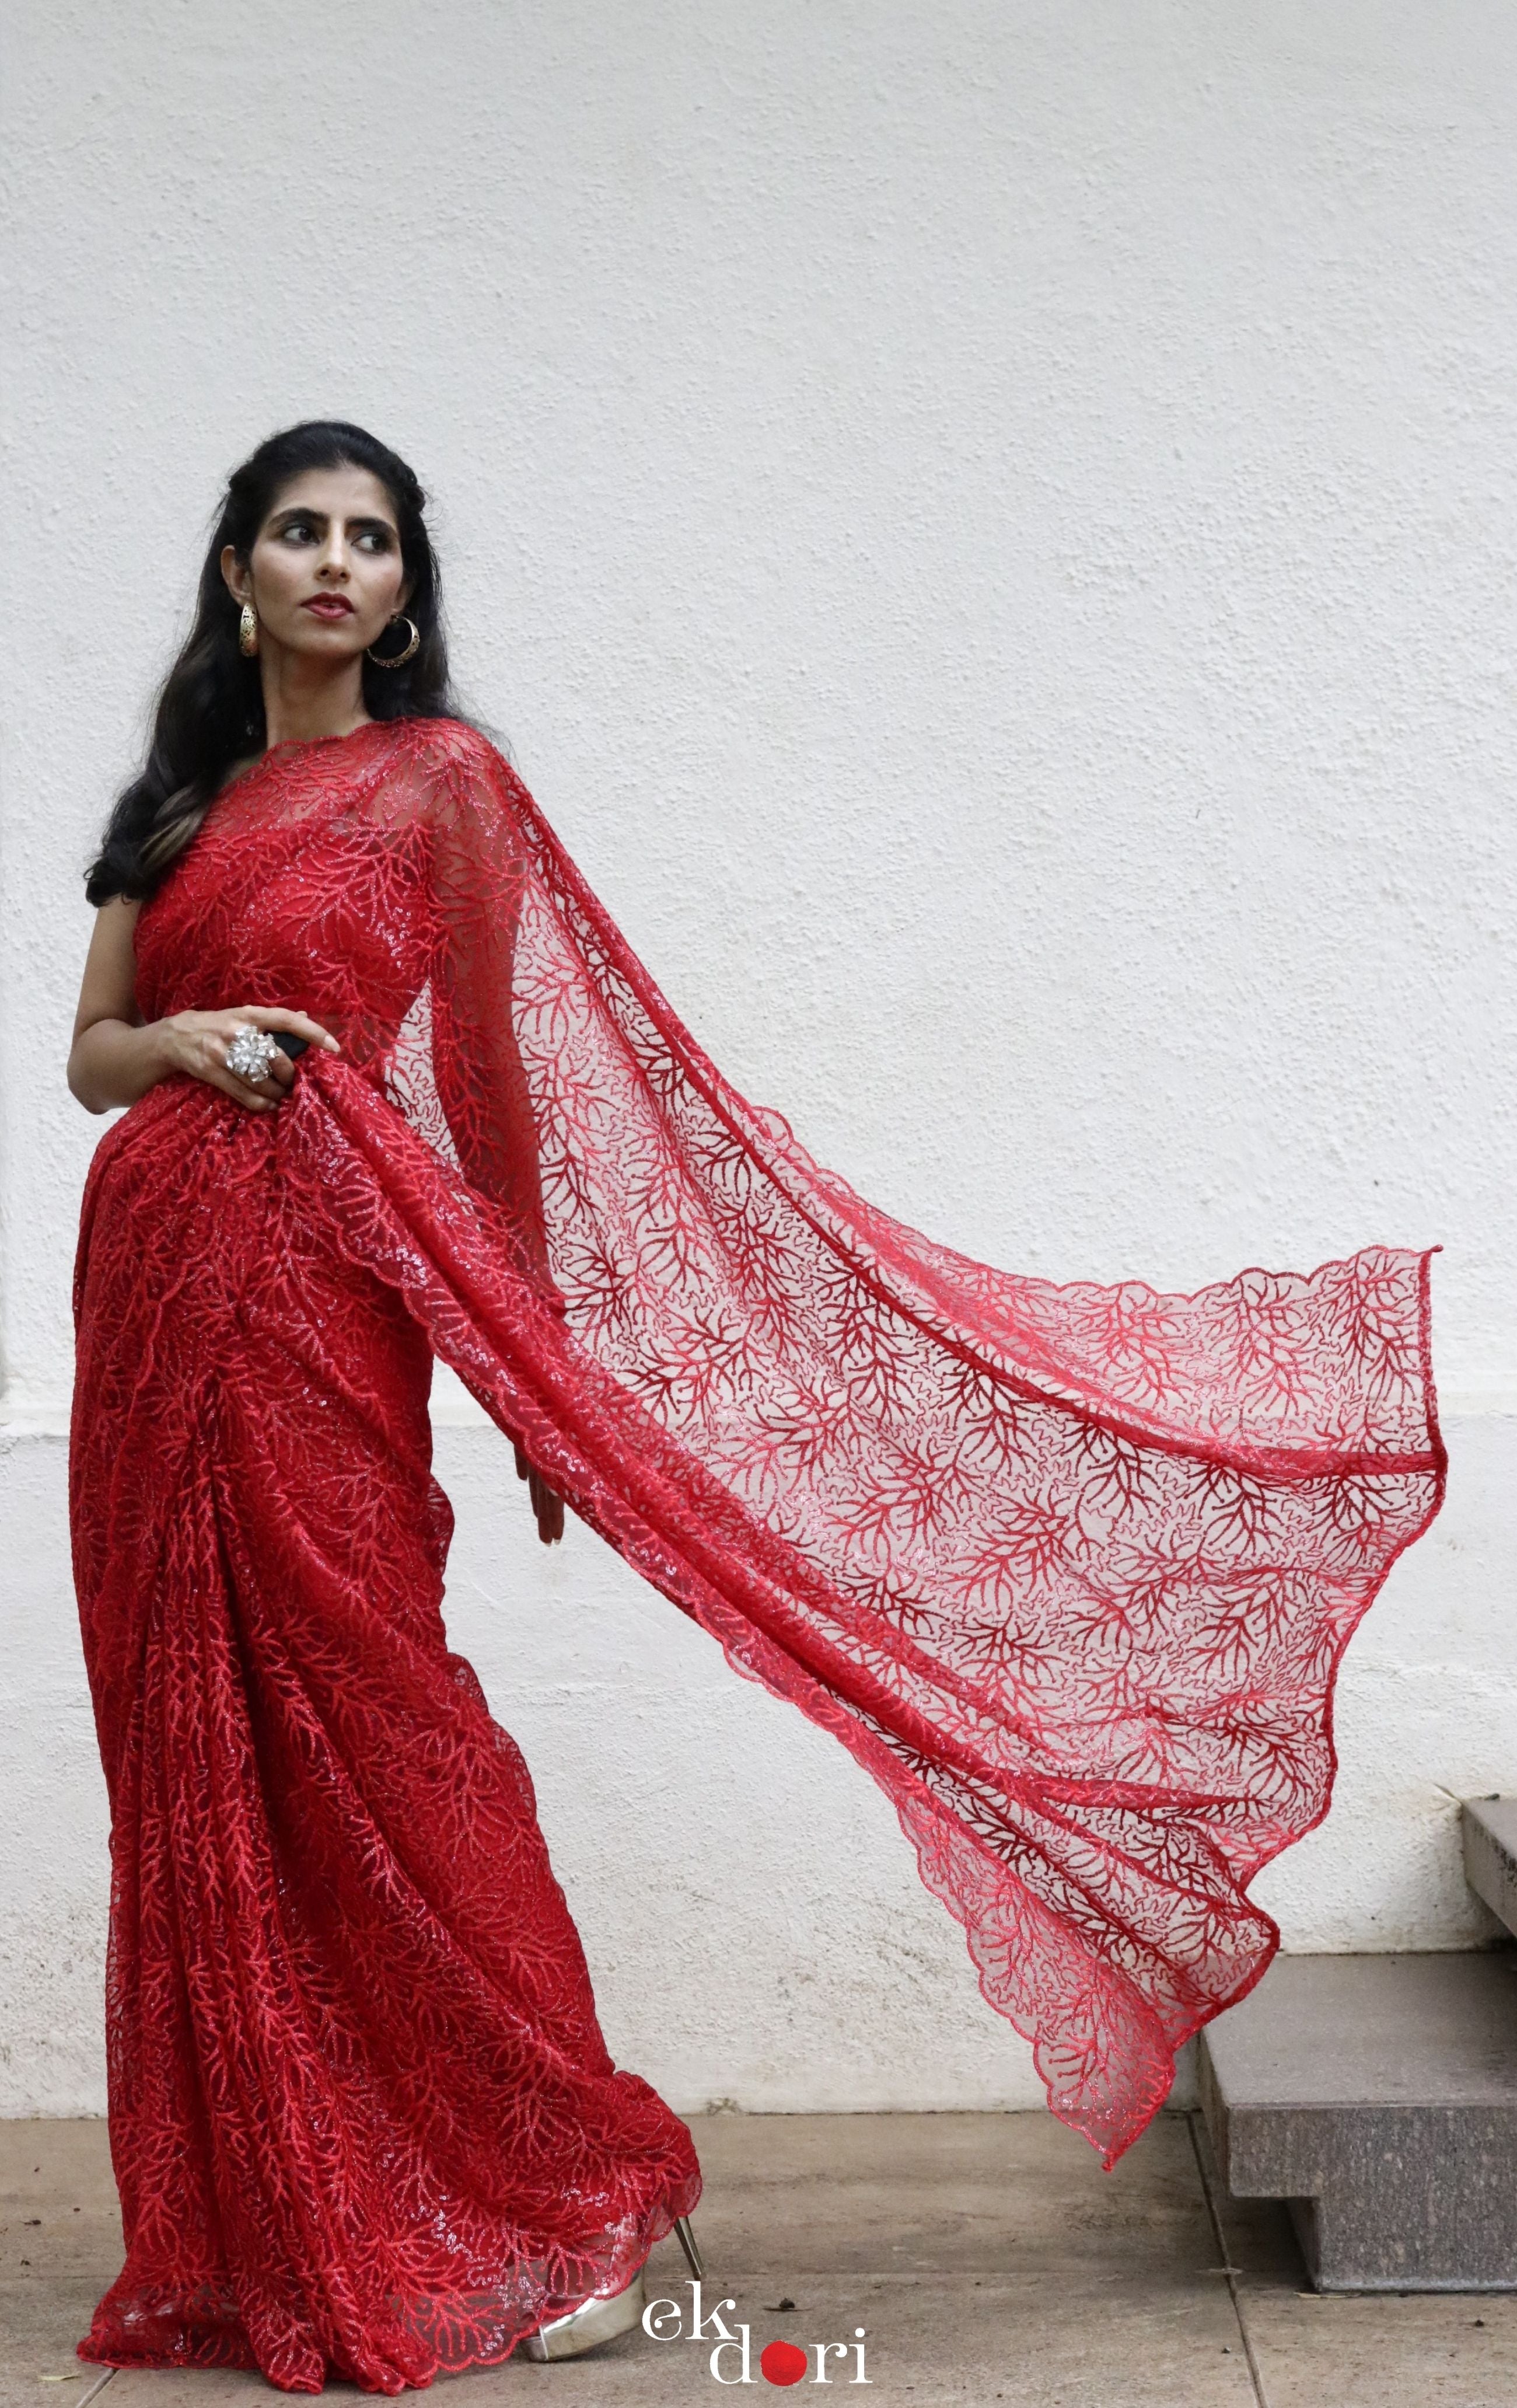 New Years Edit: Bridal Red And Gold Woven Kanjivaram Saree – Zari Banaras